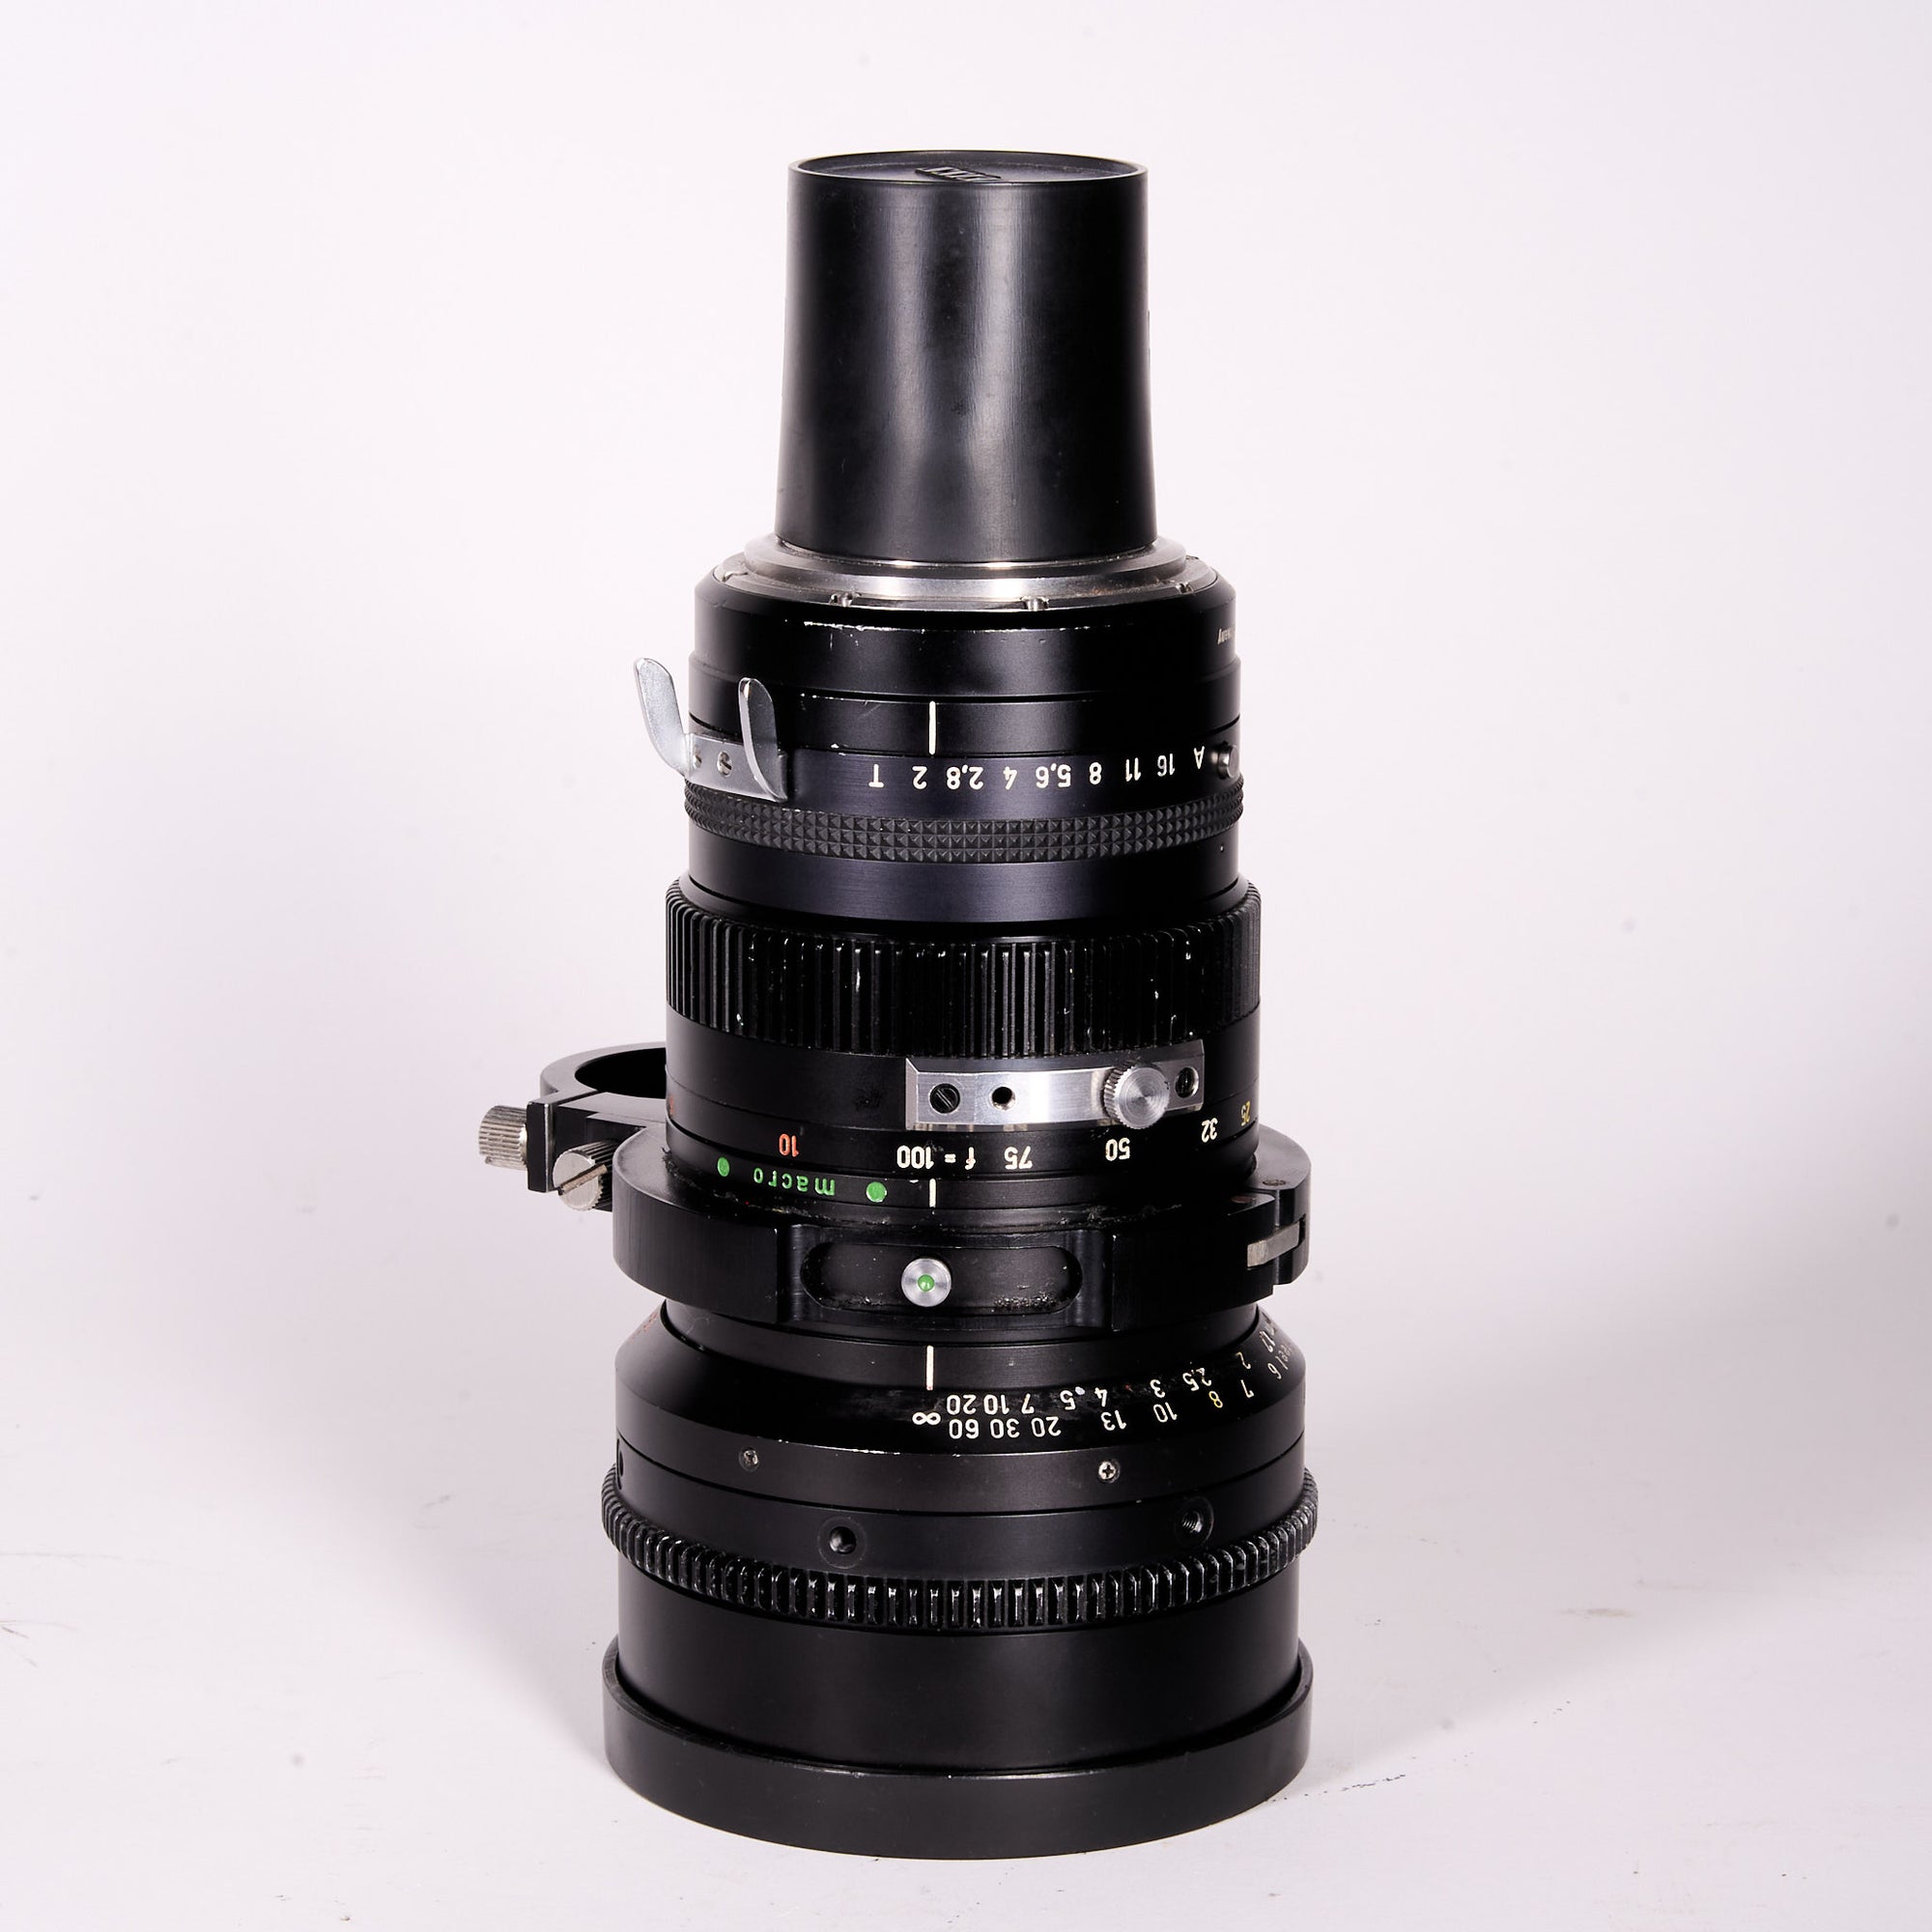 A LENS3557-7243598 Zeiss 10-100mm T2 MKII Vario-Sonnar Lens_000857.jpg